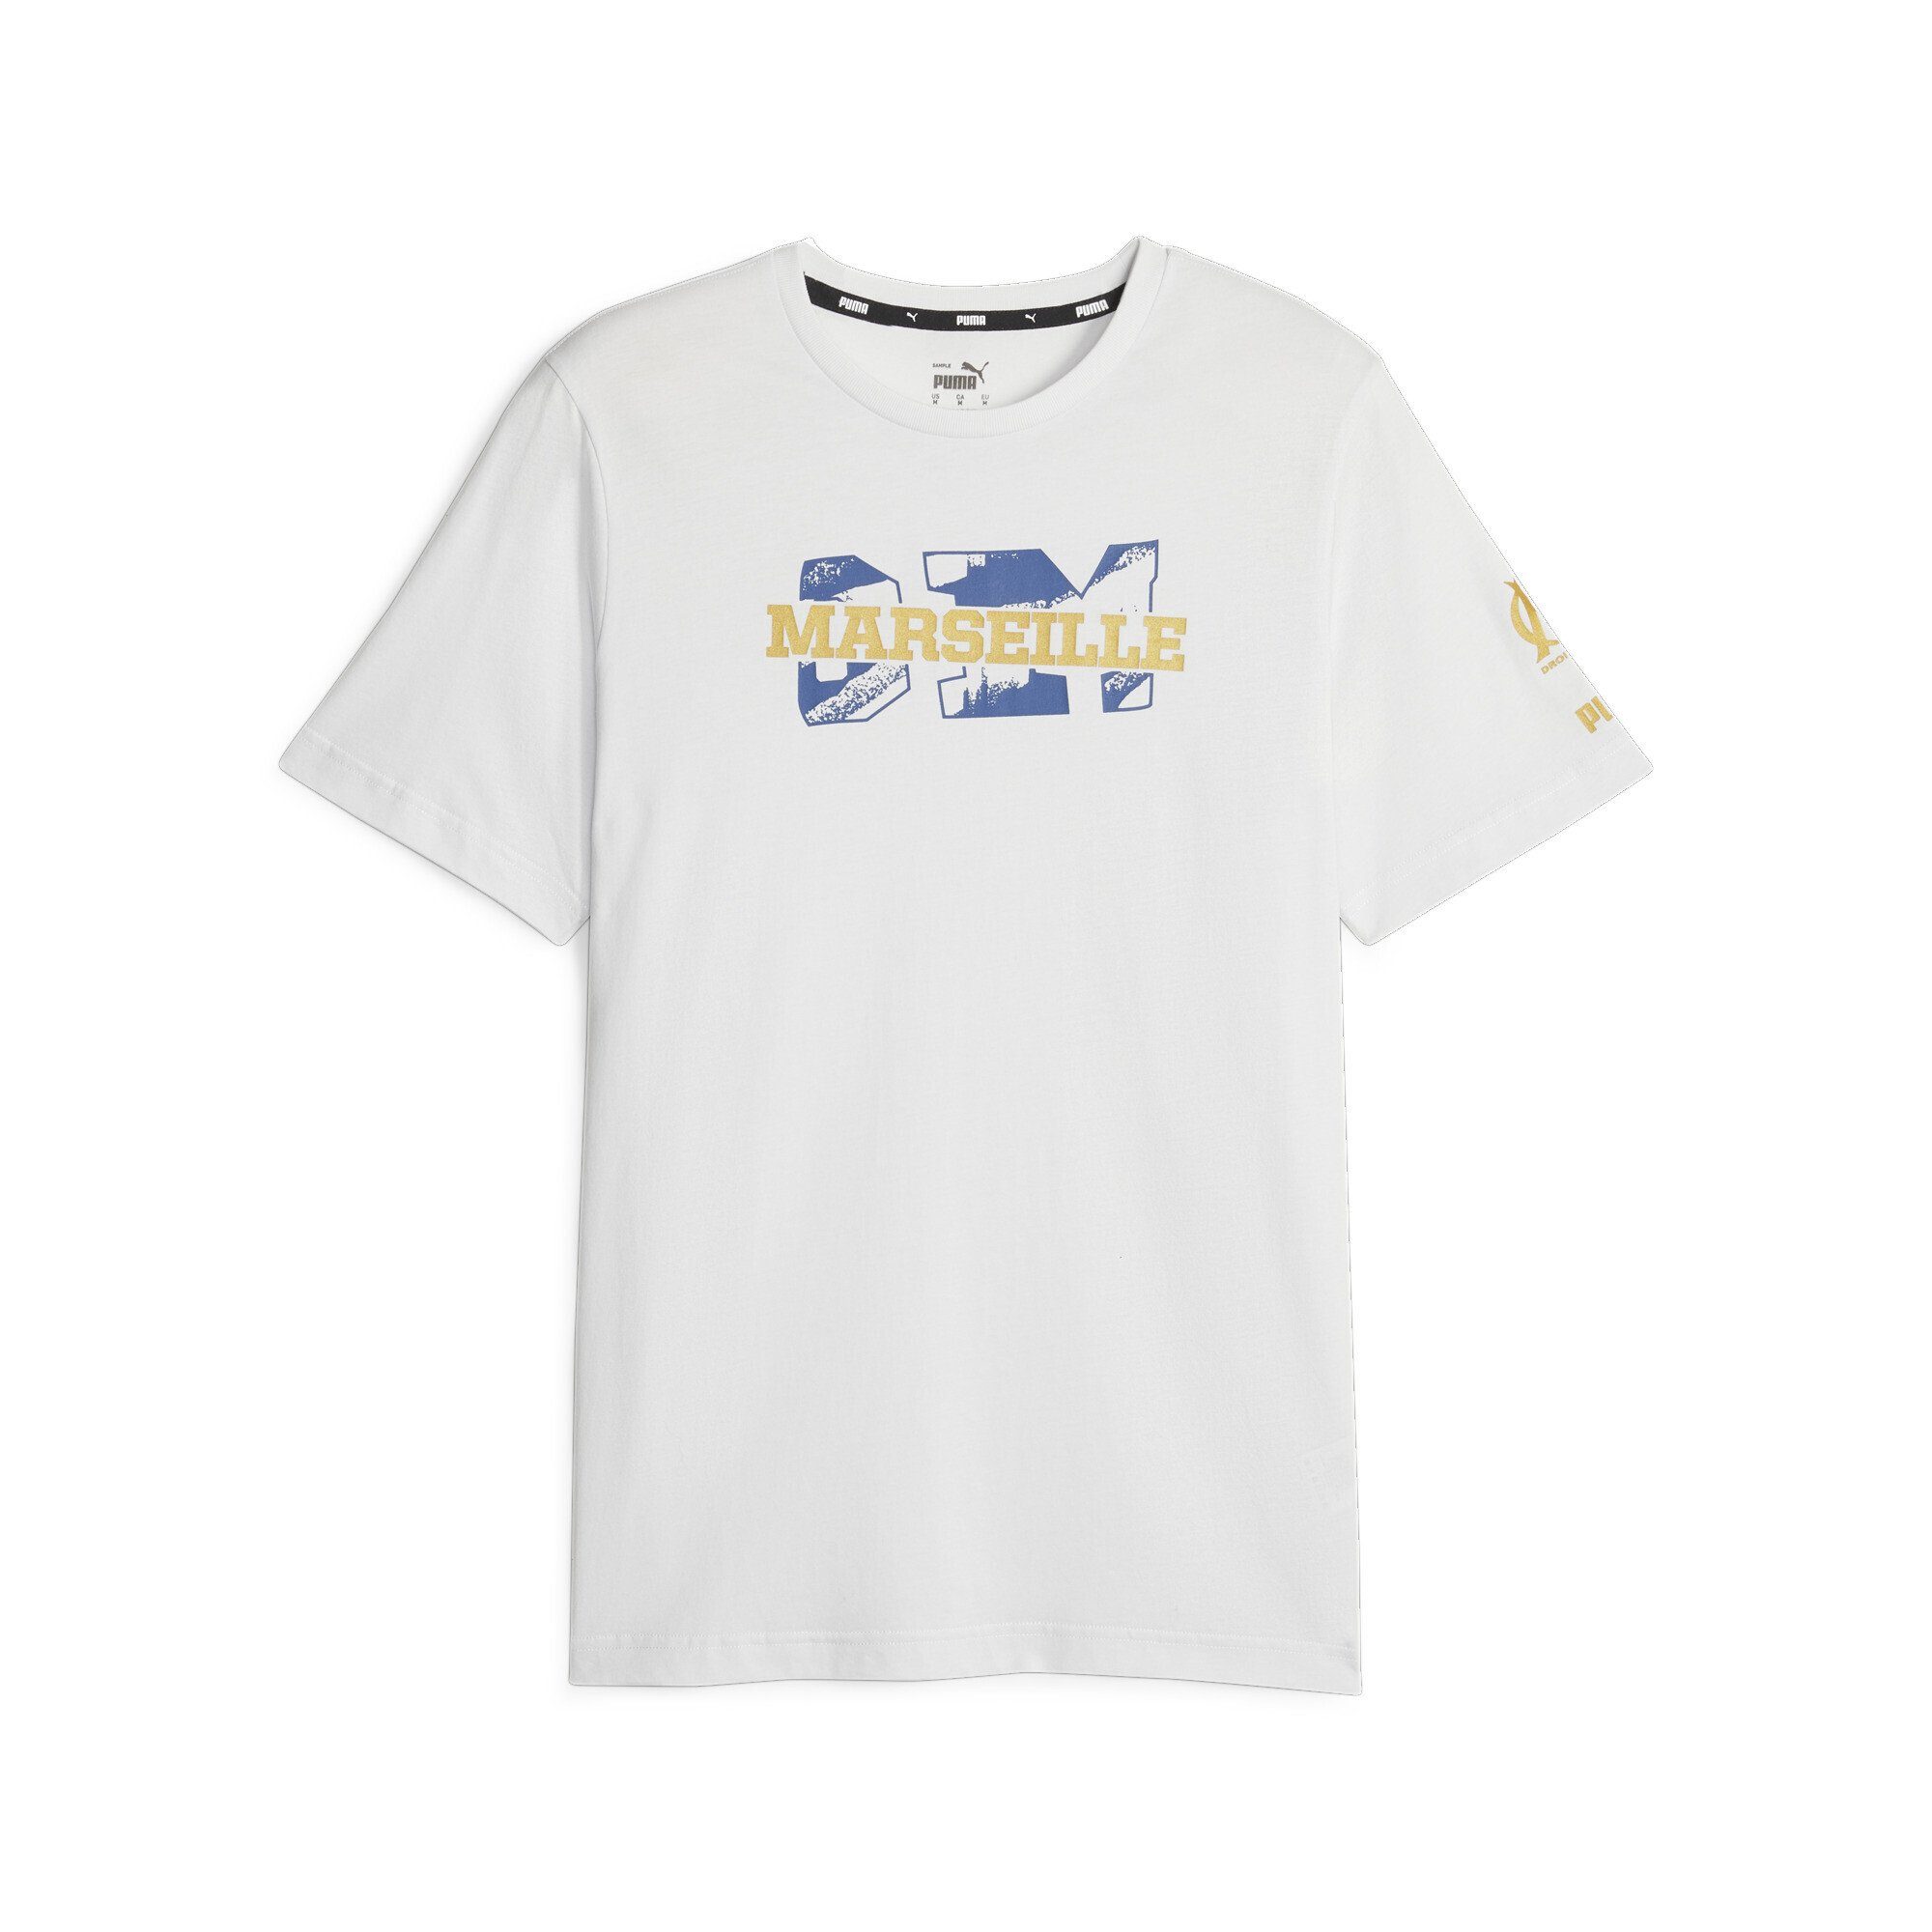 Marseille de Olympique PUMA Herren Graphic FtblCore T-Shirt T-Shirt